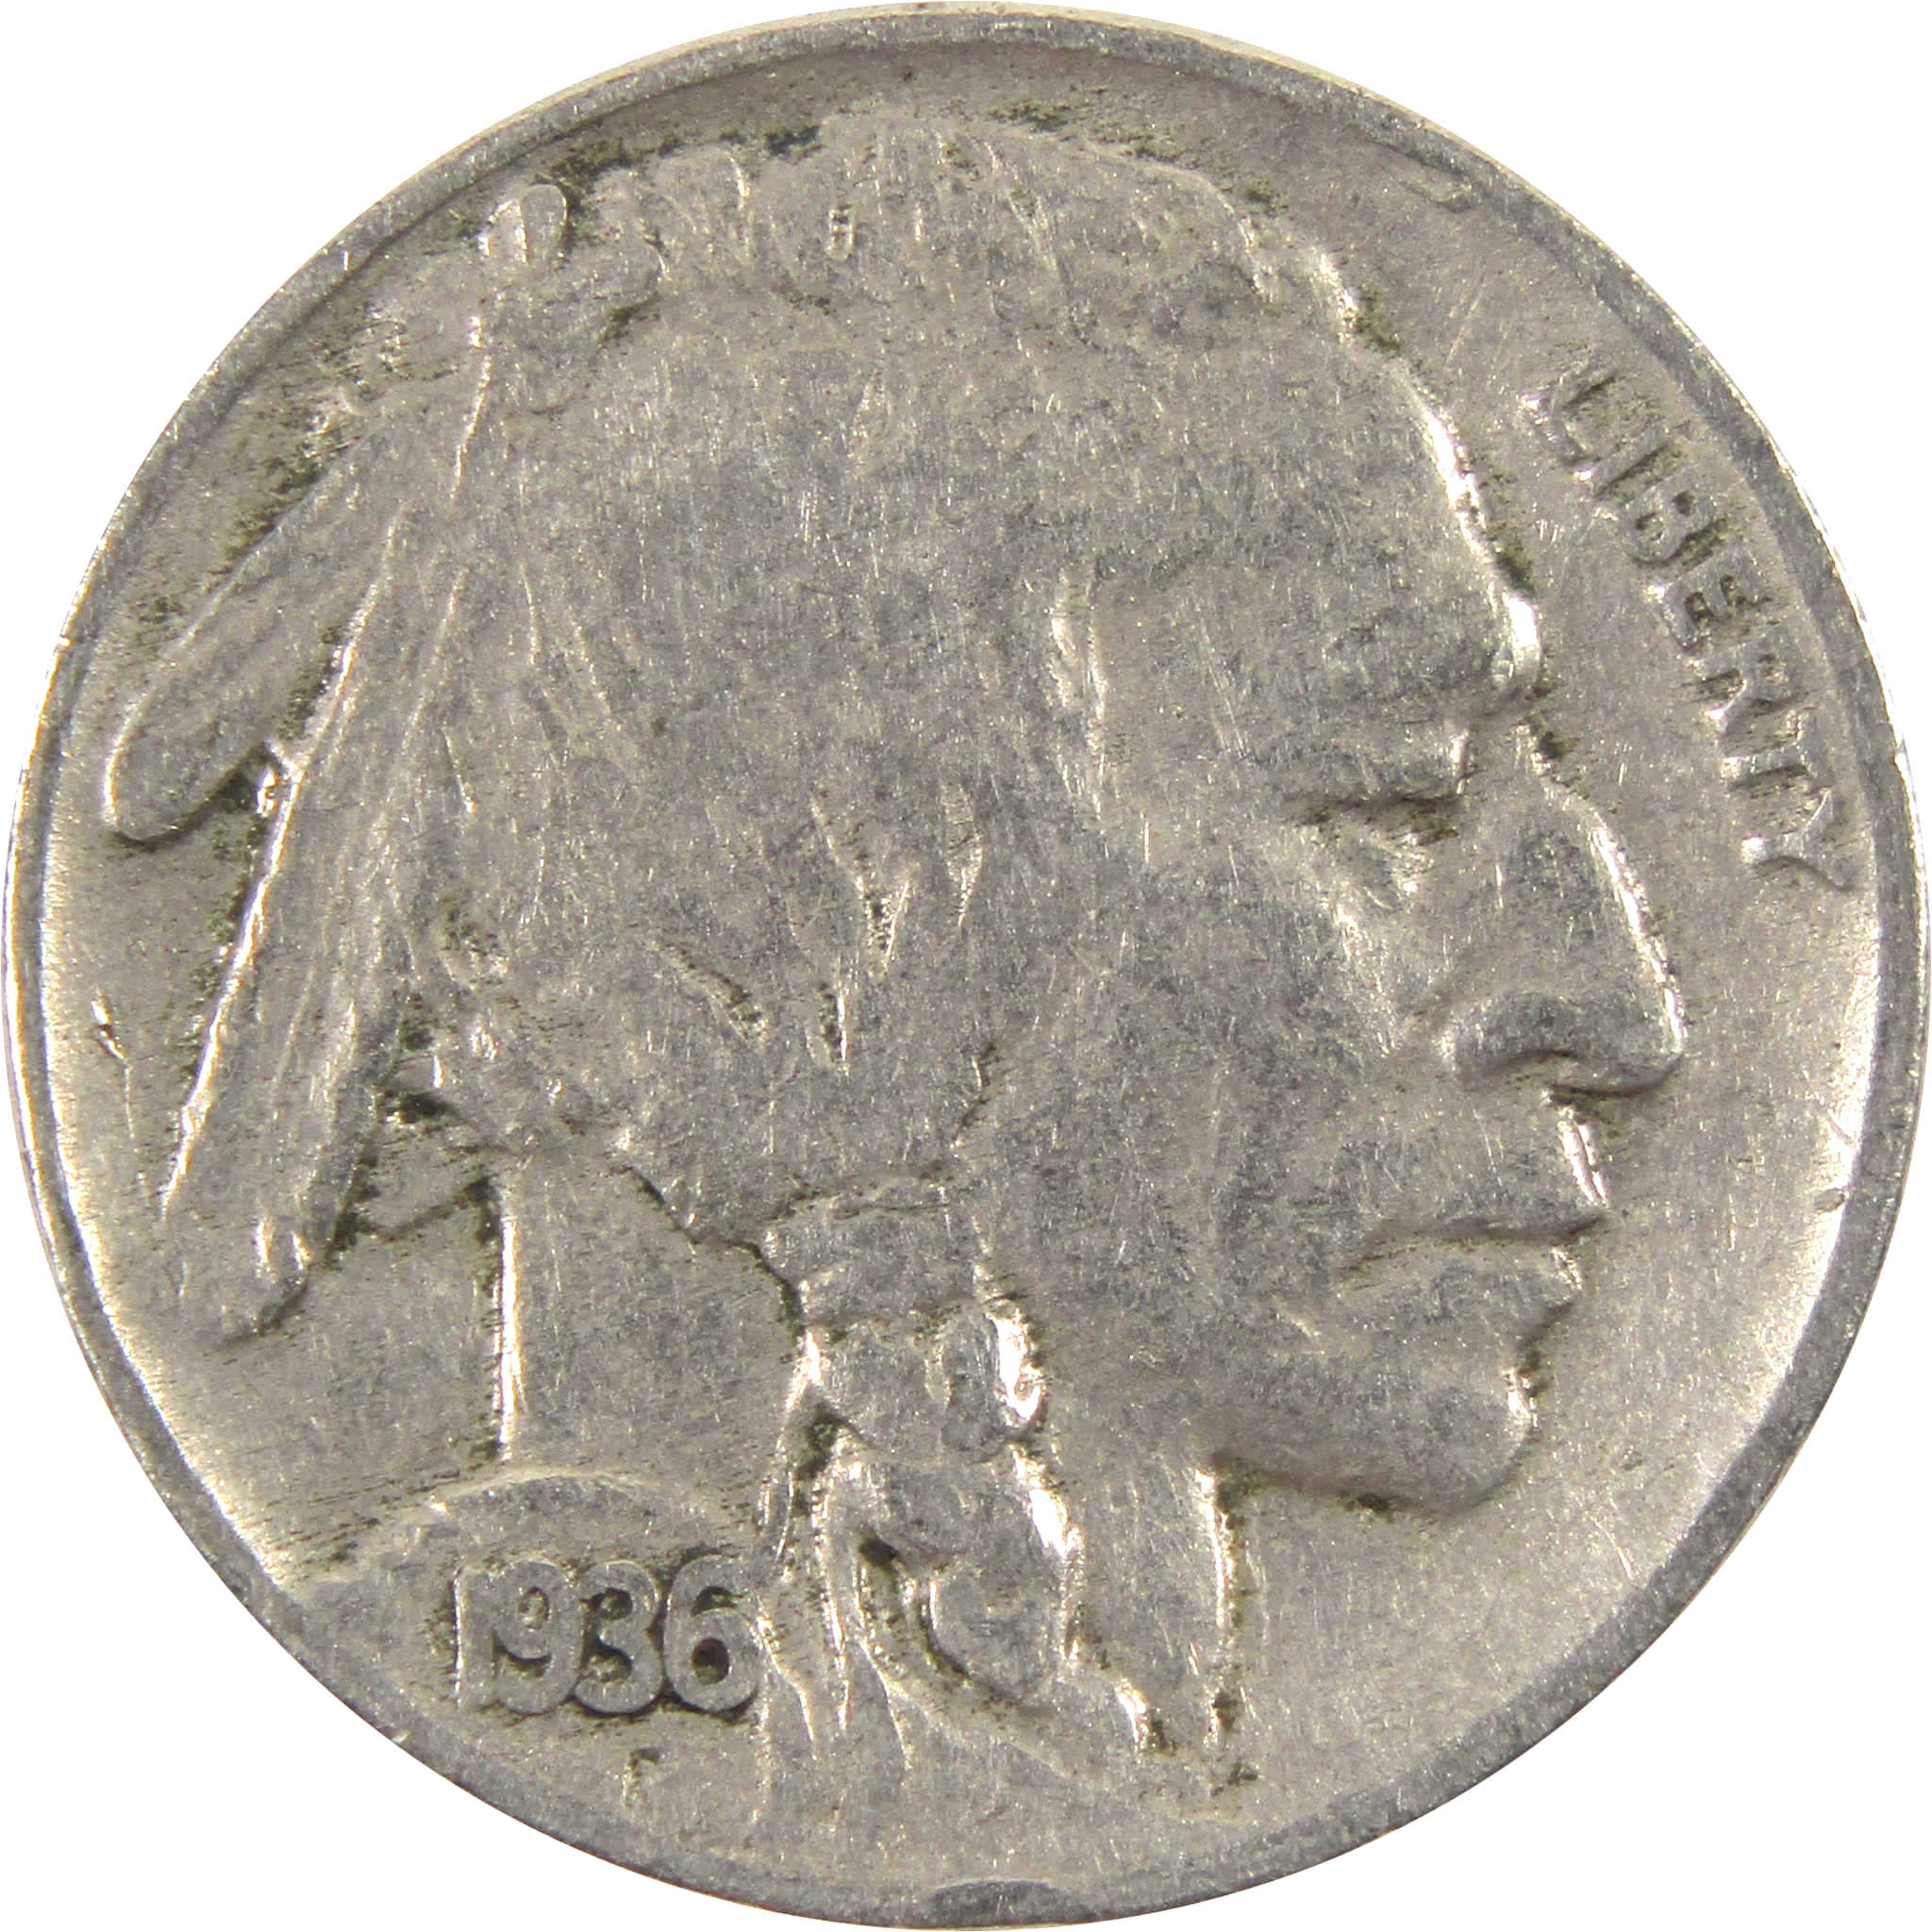 1936 Indian Head Buffalo Nickel AG About Good 5c Coin